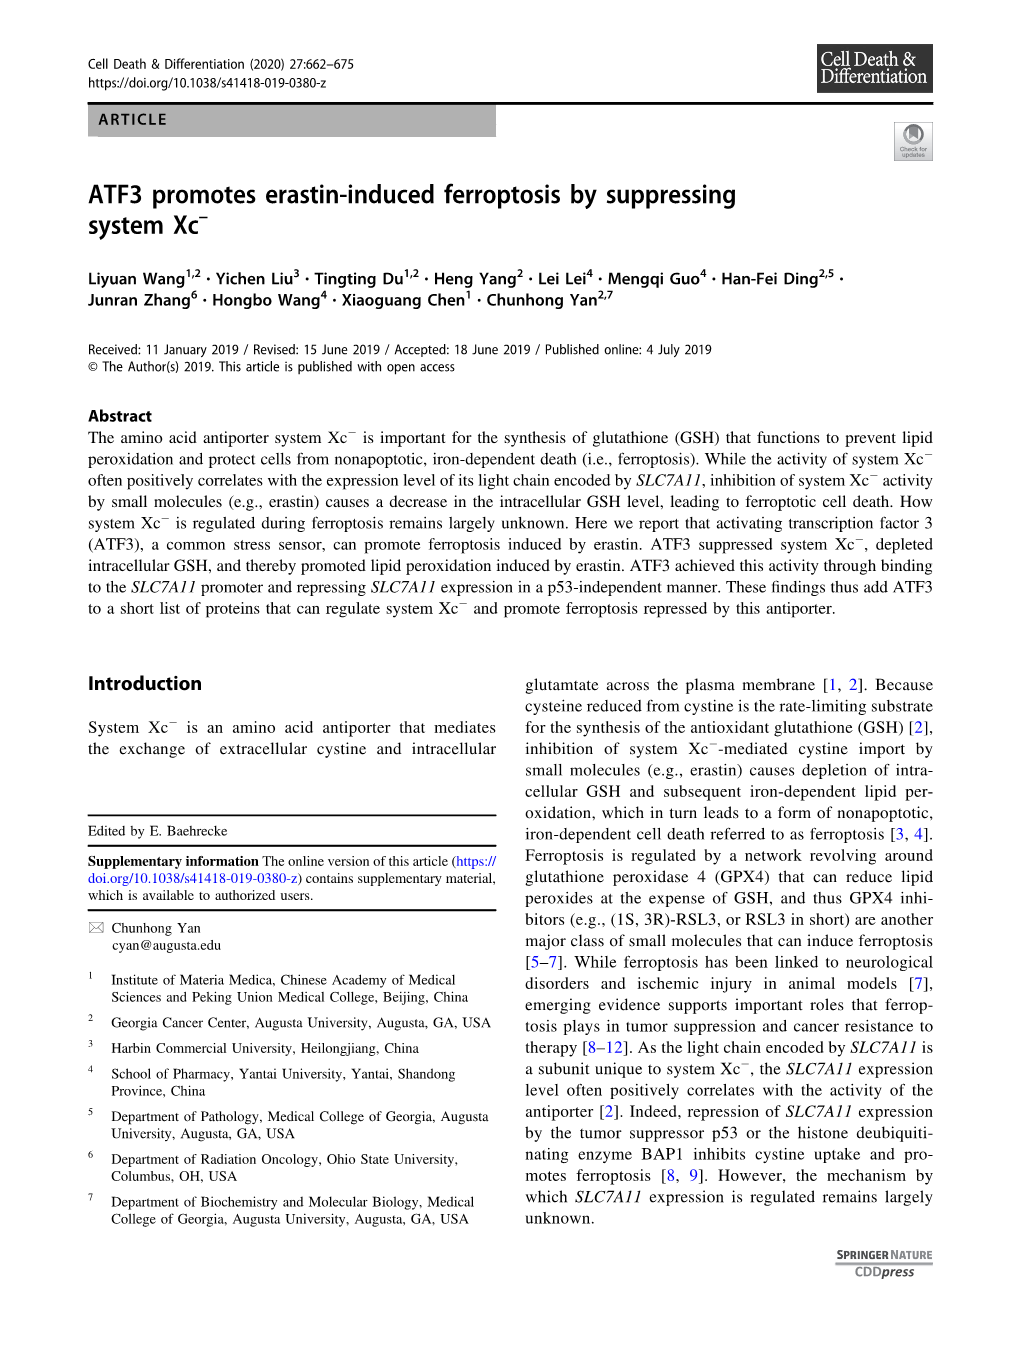 ATF3 Promotes Erastin-Induced Ferroptosis by Suppressing System Xc–